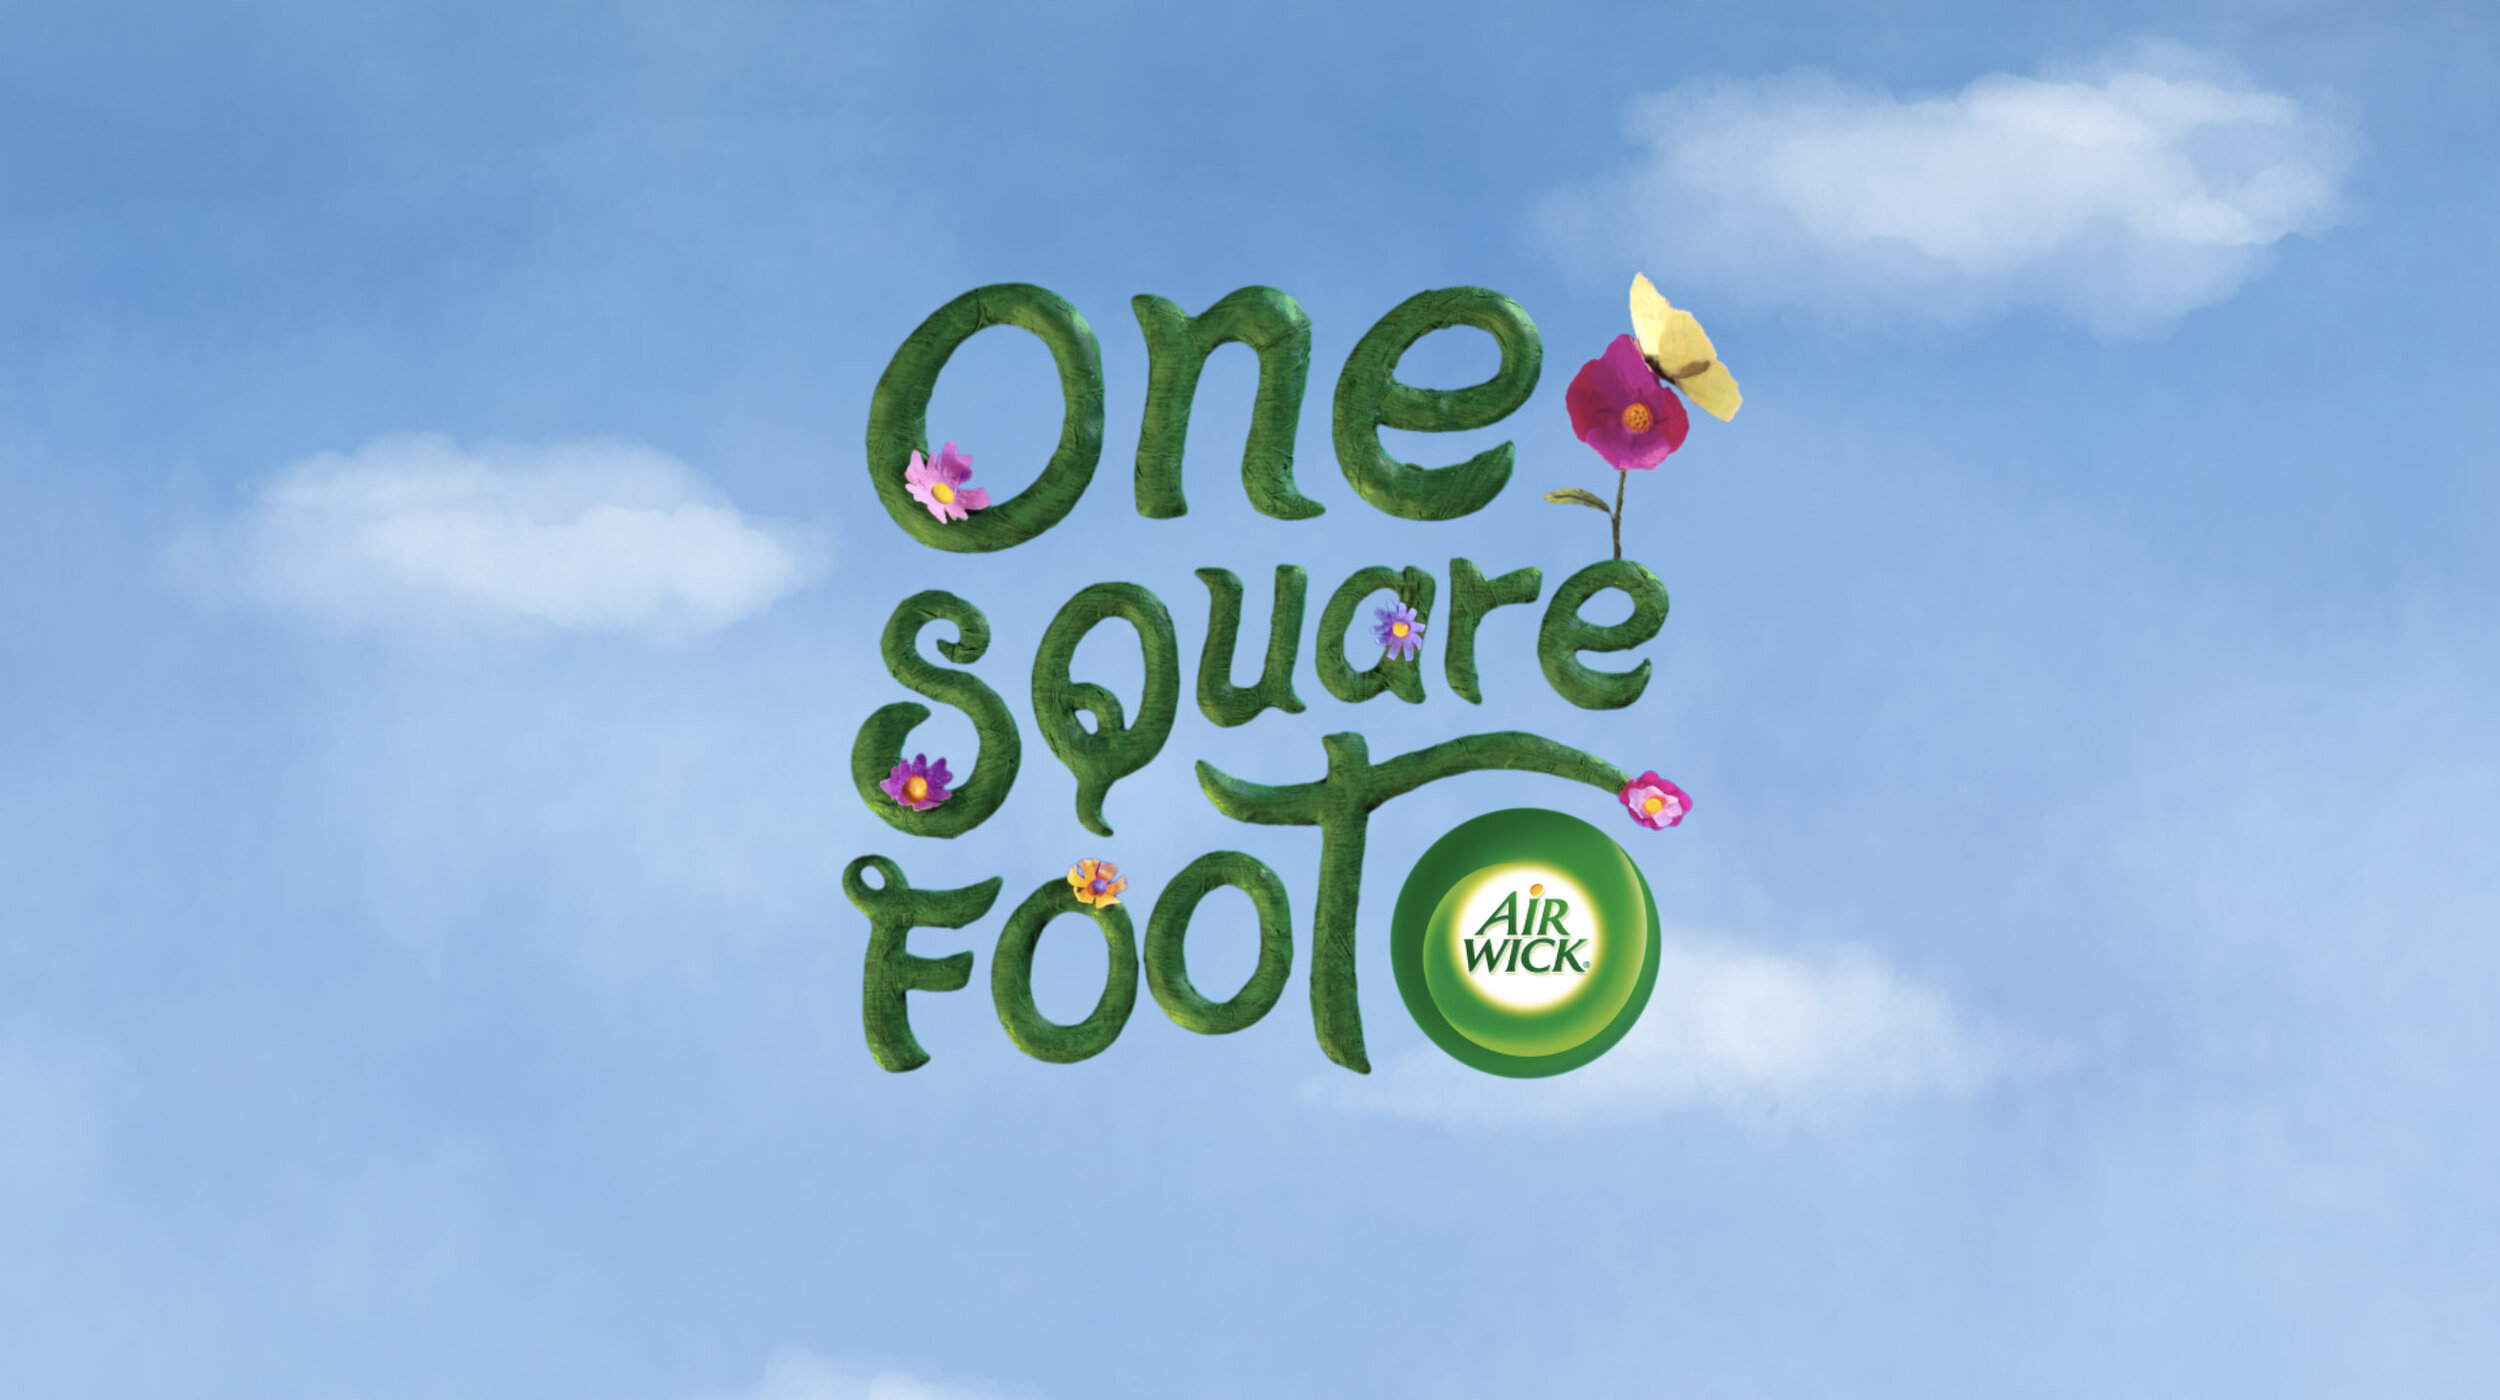 OSF_logo.jpg